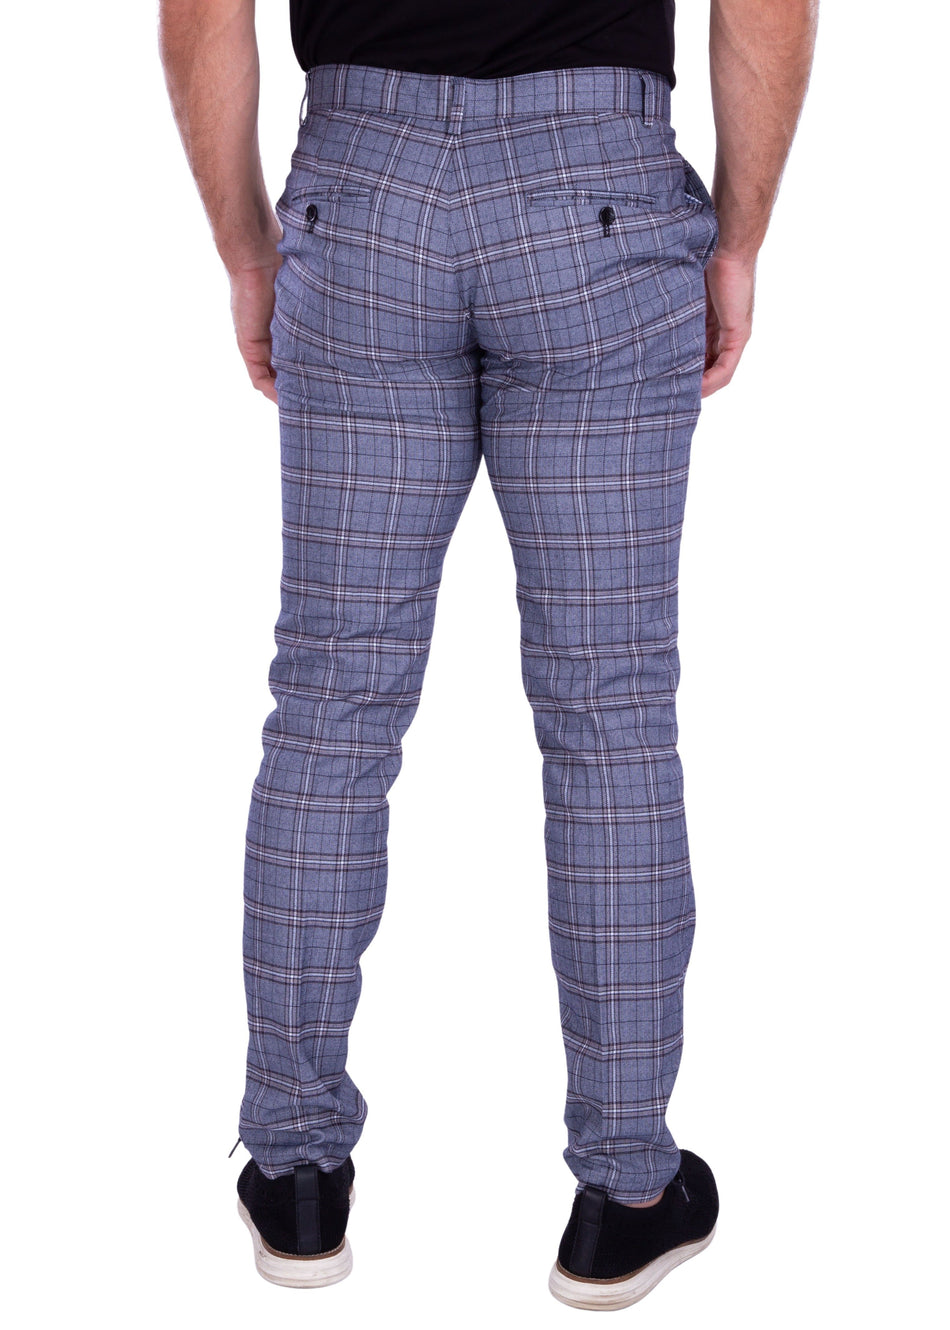 213110 - Gray Plaid Pants